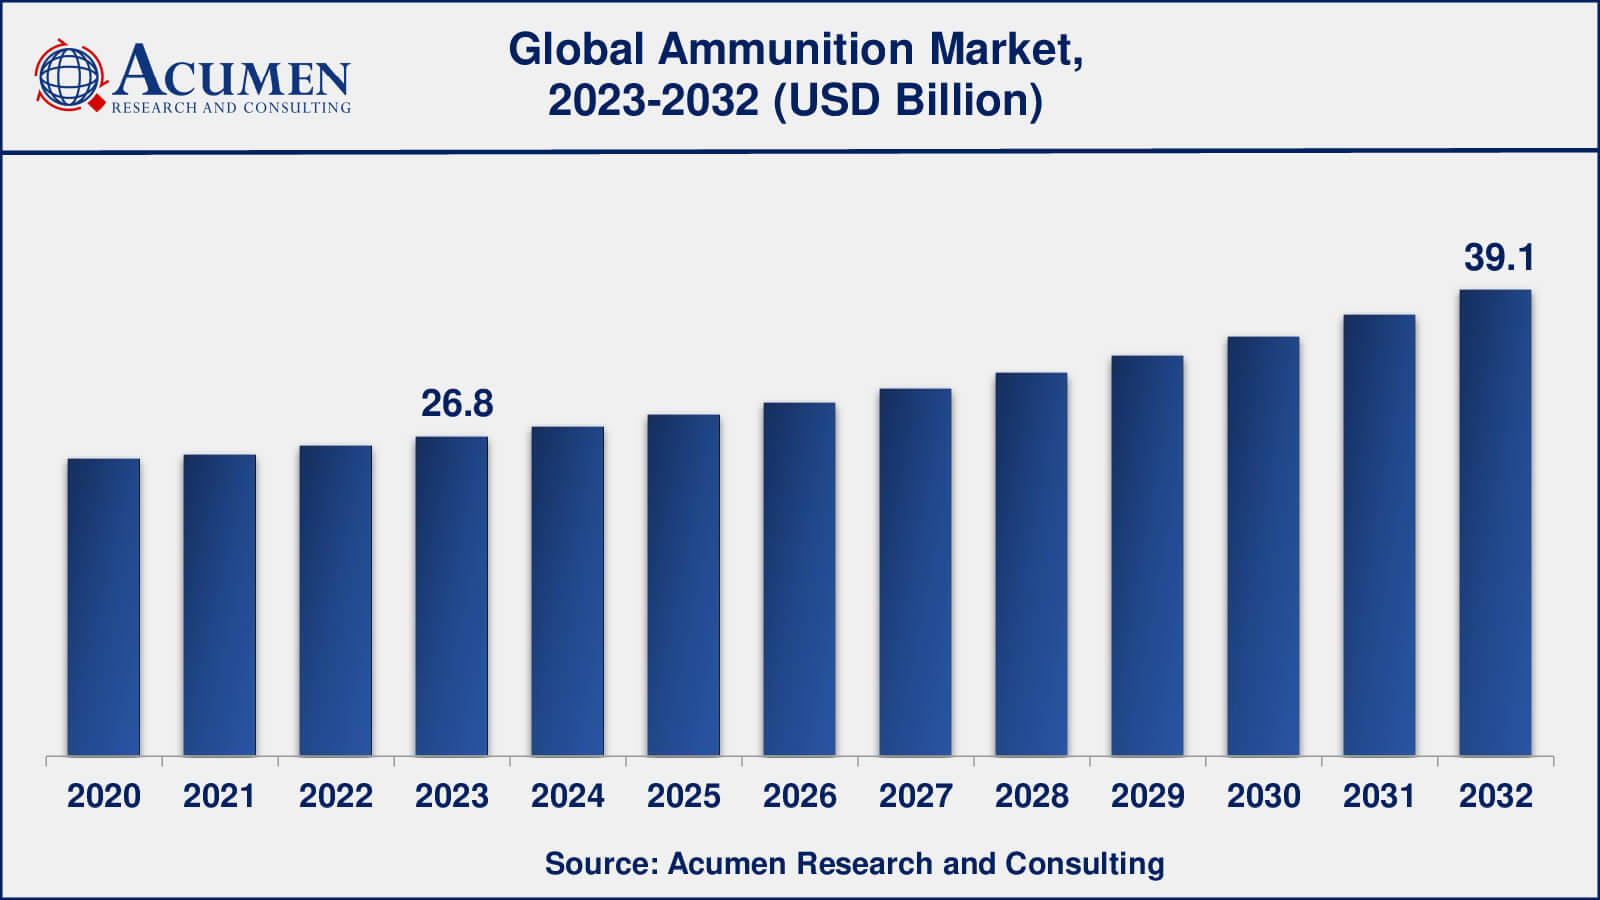 Global Ammunition Market Dynamics